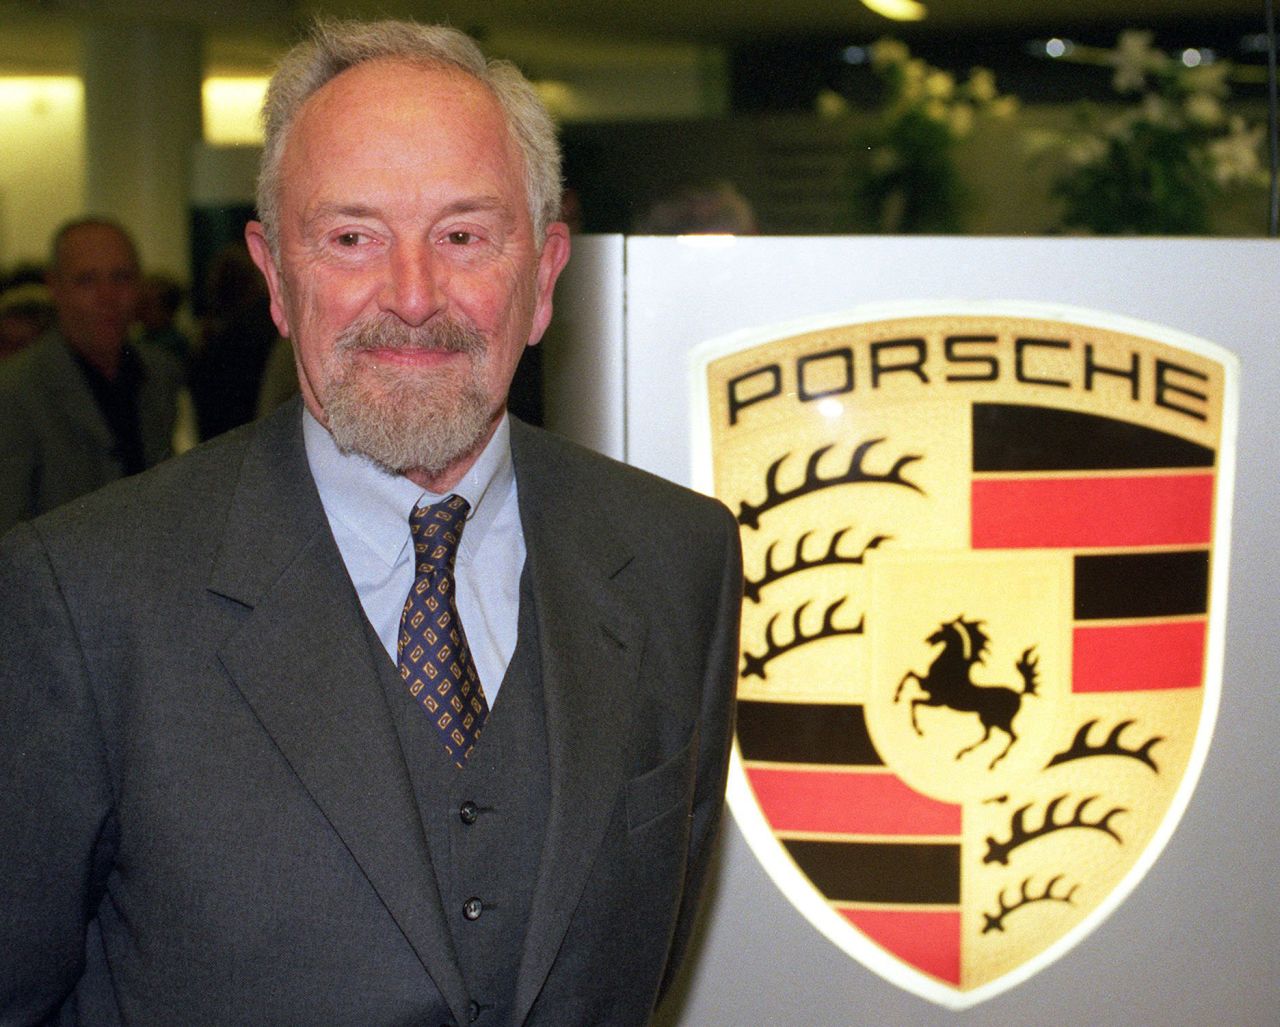 Porsche 911 designer <a href="http://www.cnn.com/2012/04/06/world/europe/obit-porsche/index.html">Ferdinand Alexander Porsche</a> died on April 5 at the age of 76. 